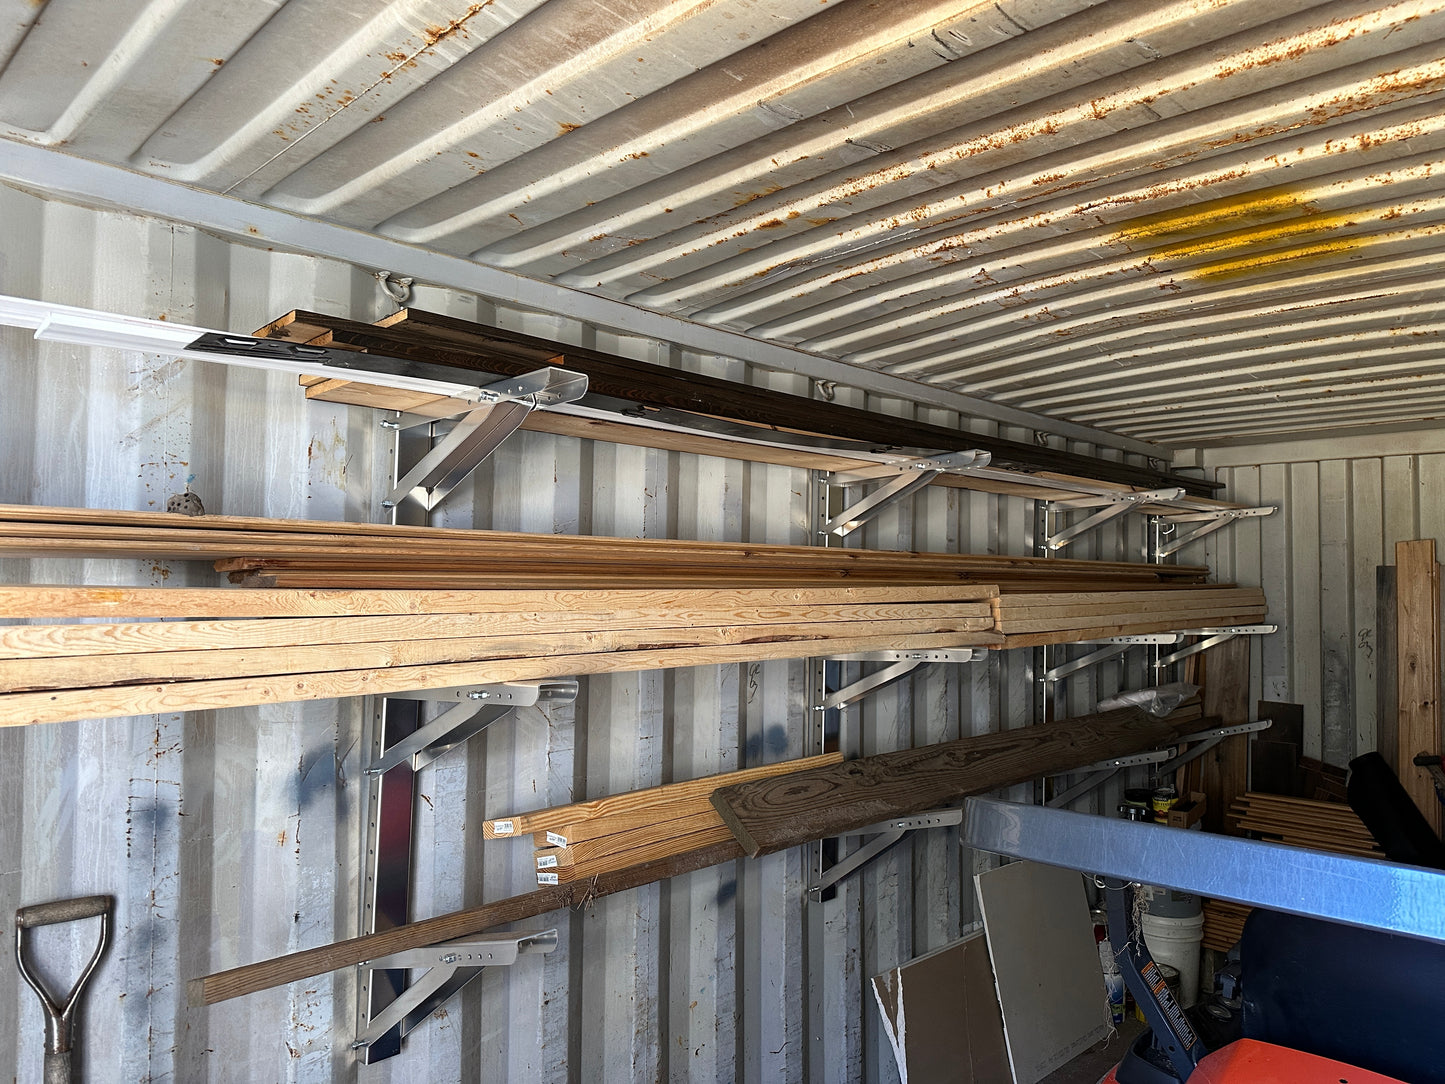 Shipping Container Shelf Bar Rack